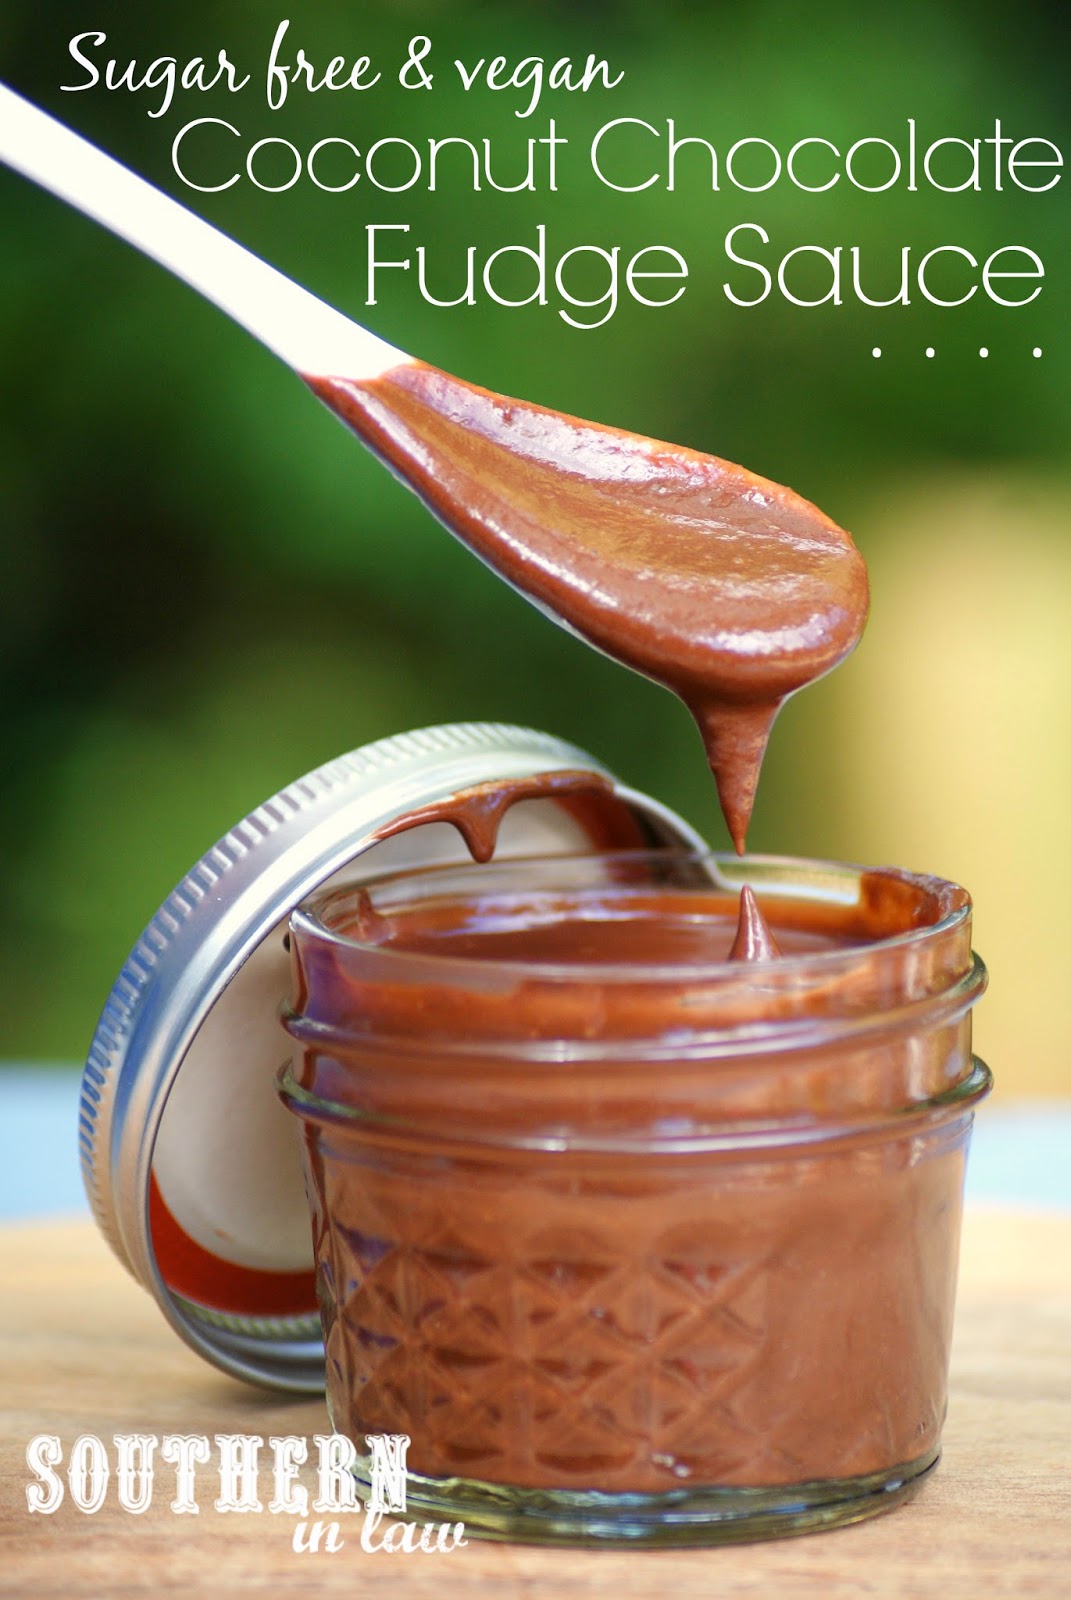 Healthy Chocolate Fudge Sauce Recipe - Gluten free, sugar free, vegan